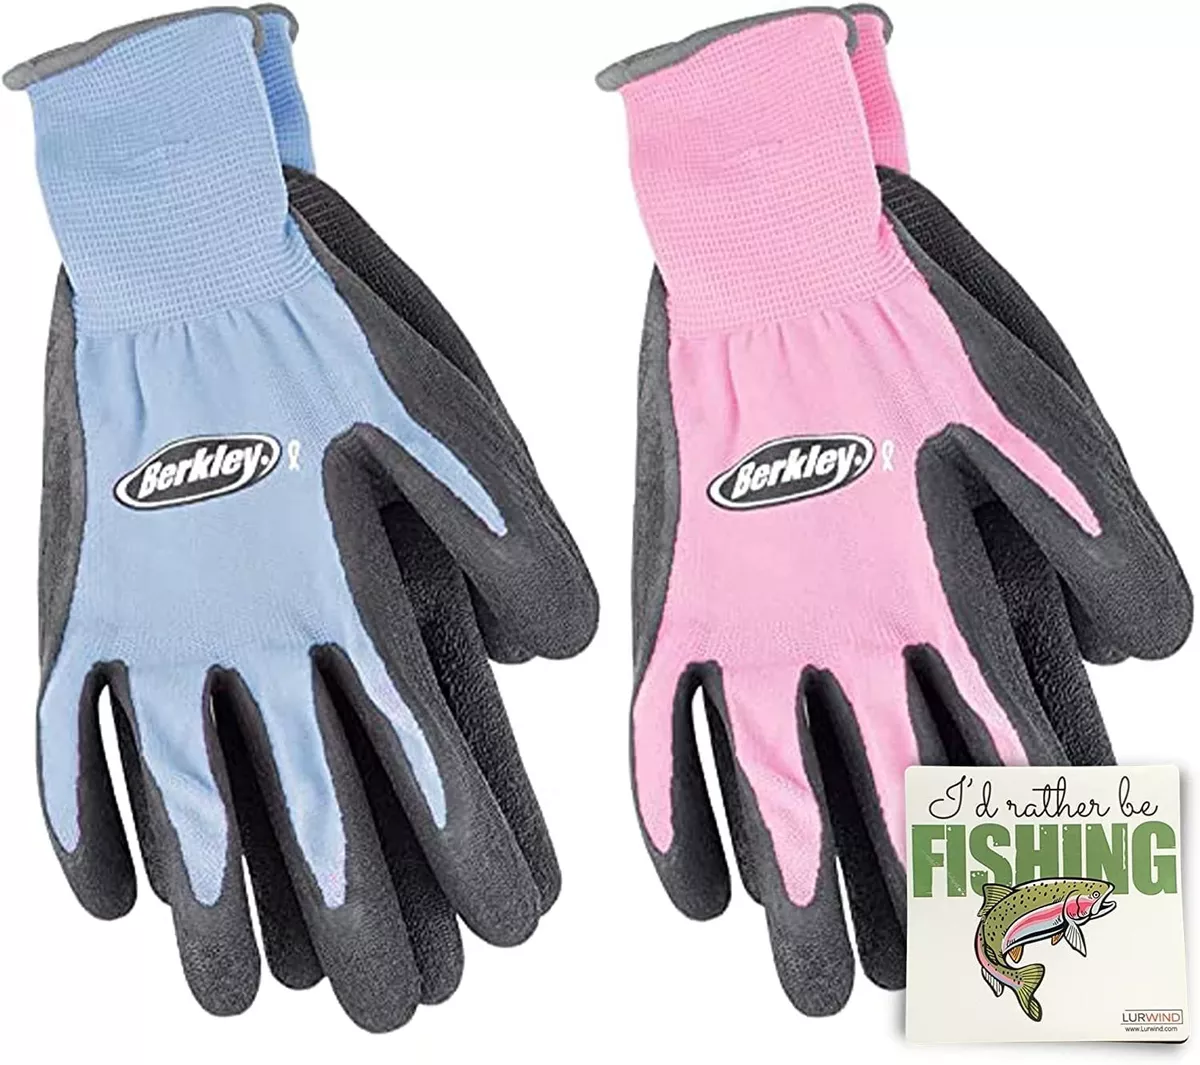 Lurwind Berkley Fishing Gloves Bundle with I'd Rather Be Fishing Sticker  